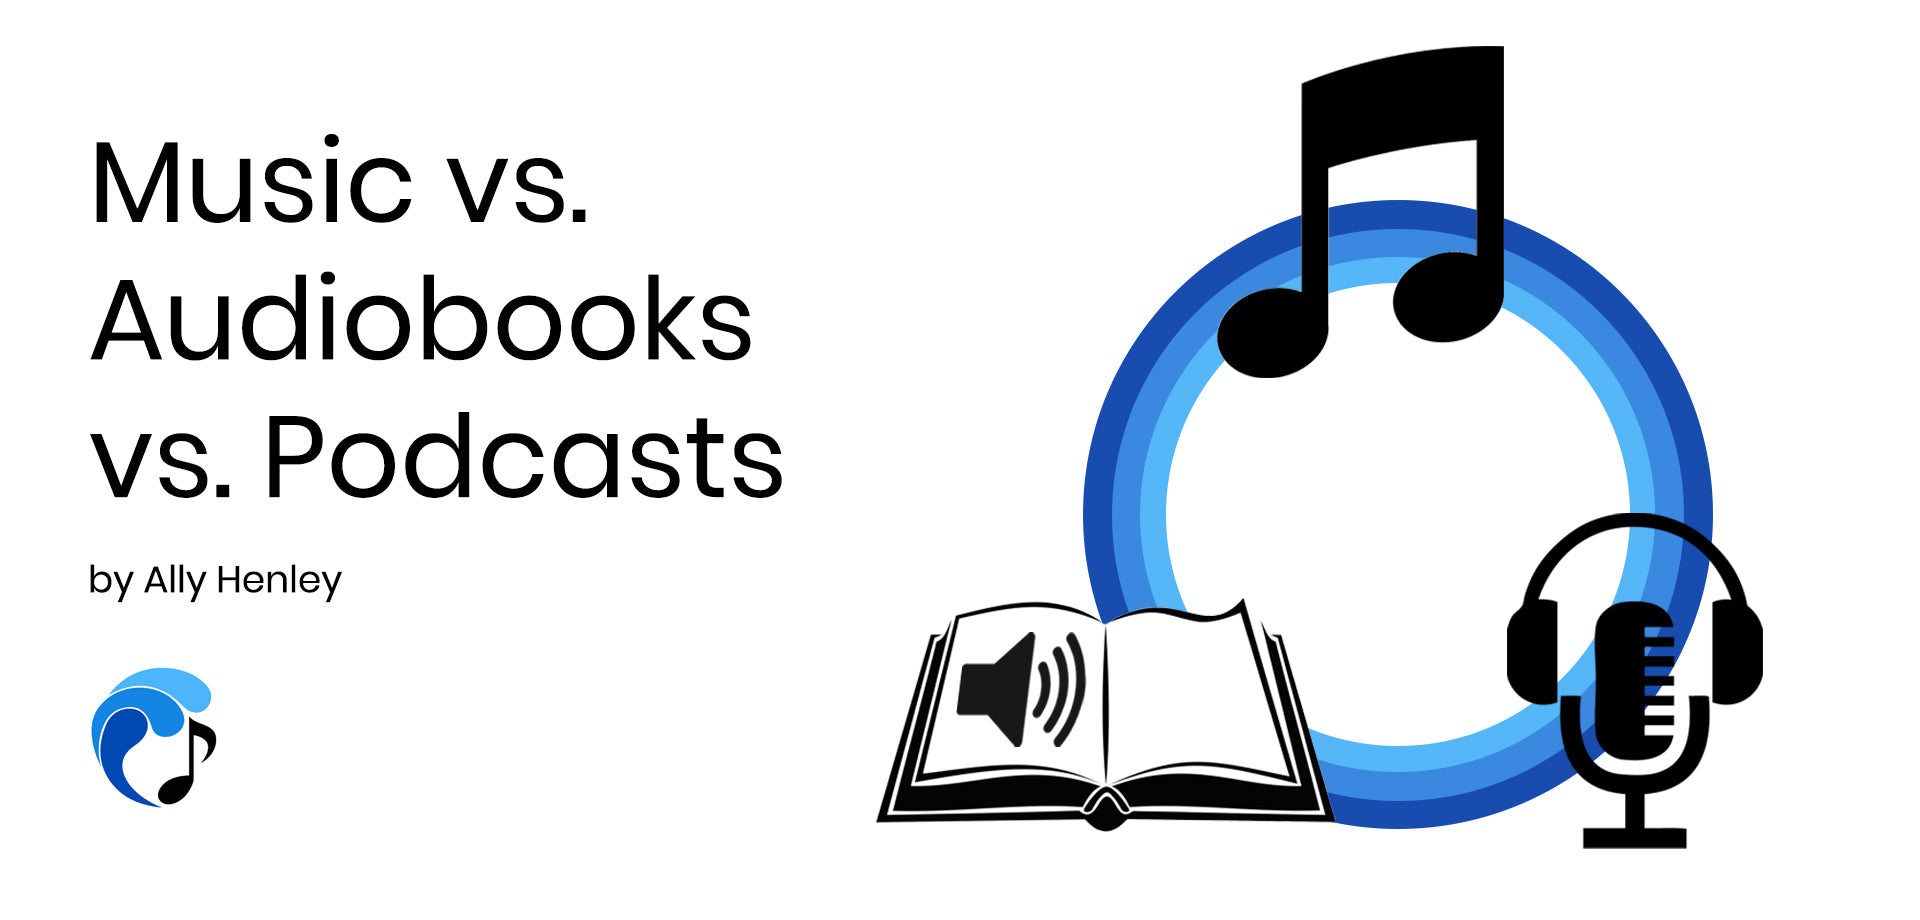 Music vs. Audiobooks vs. Podcasts